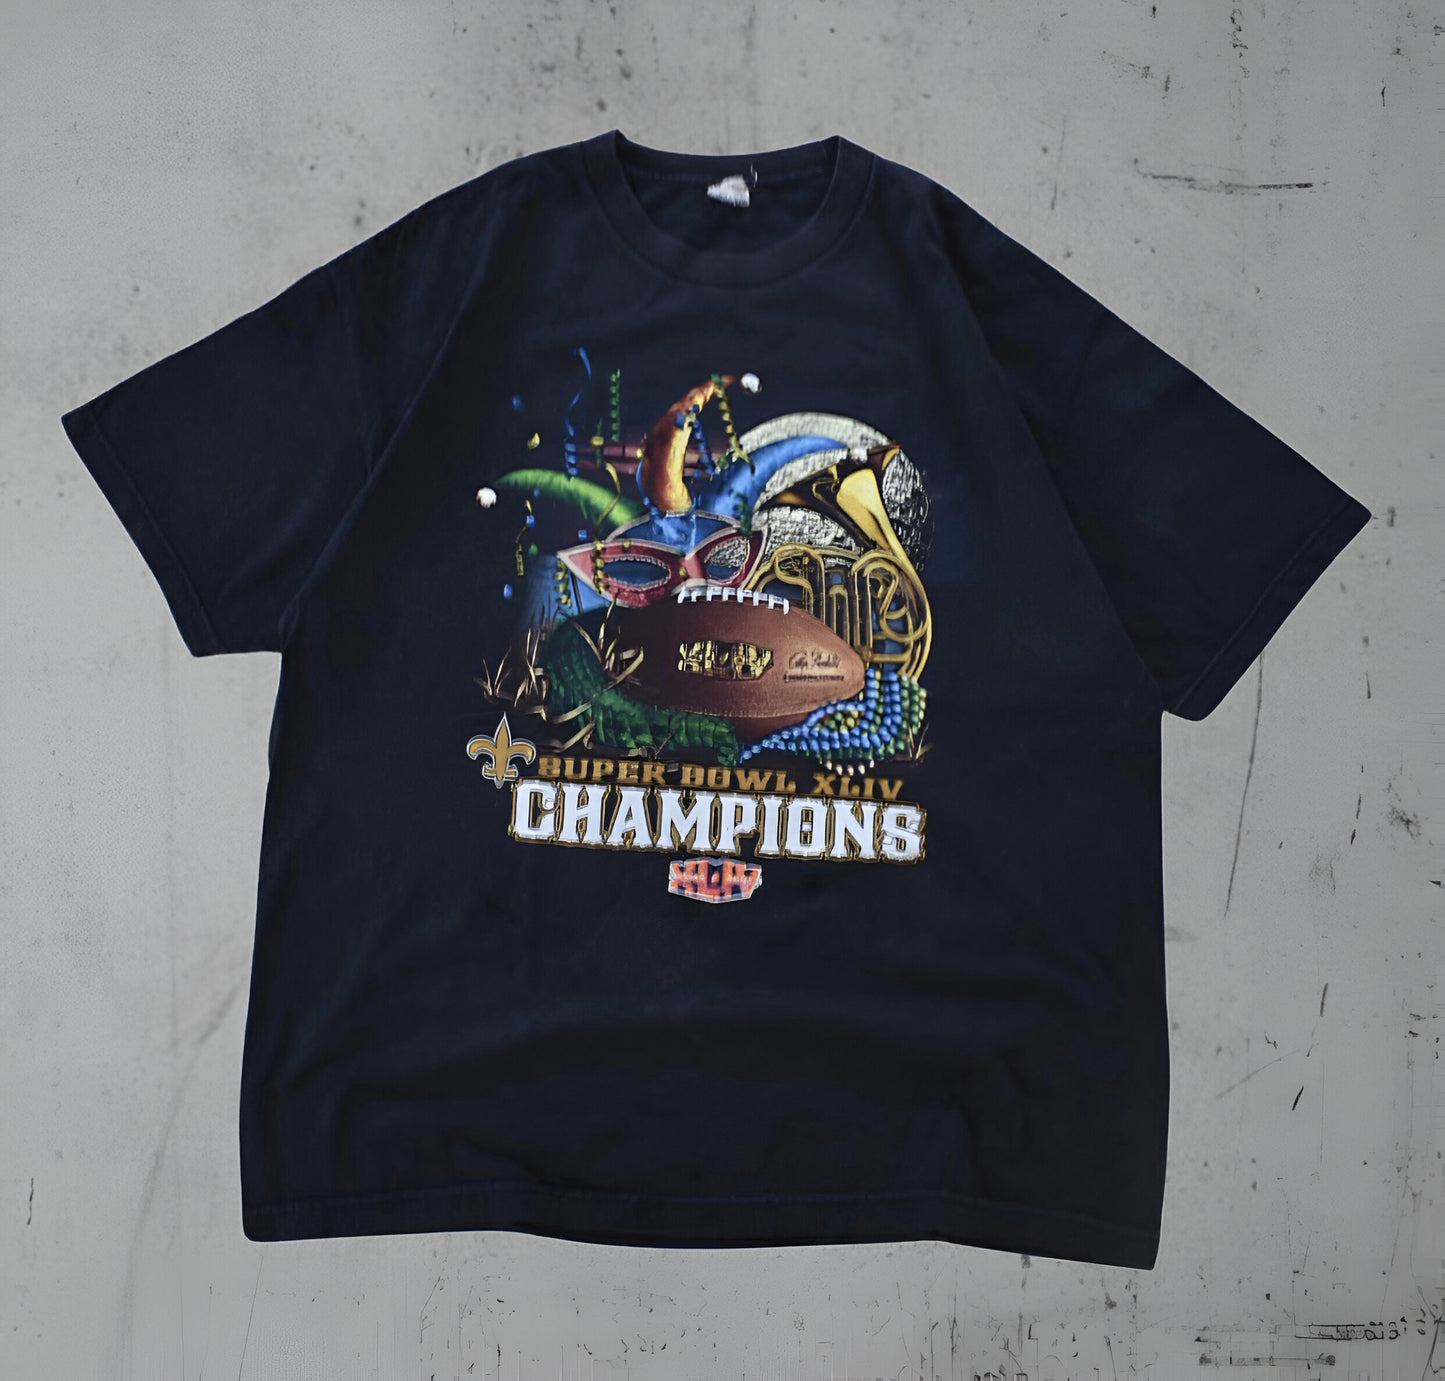 Alstyles Super Bowl Champions XLIVTee (XL)